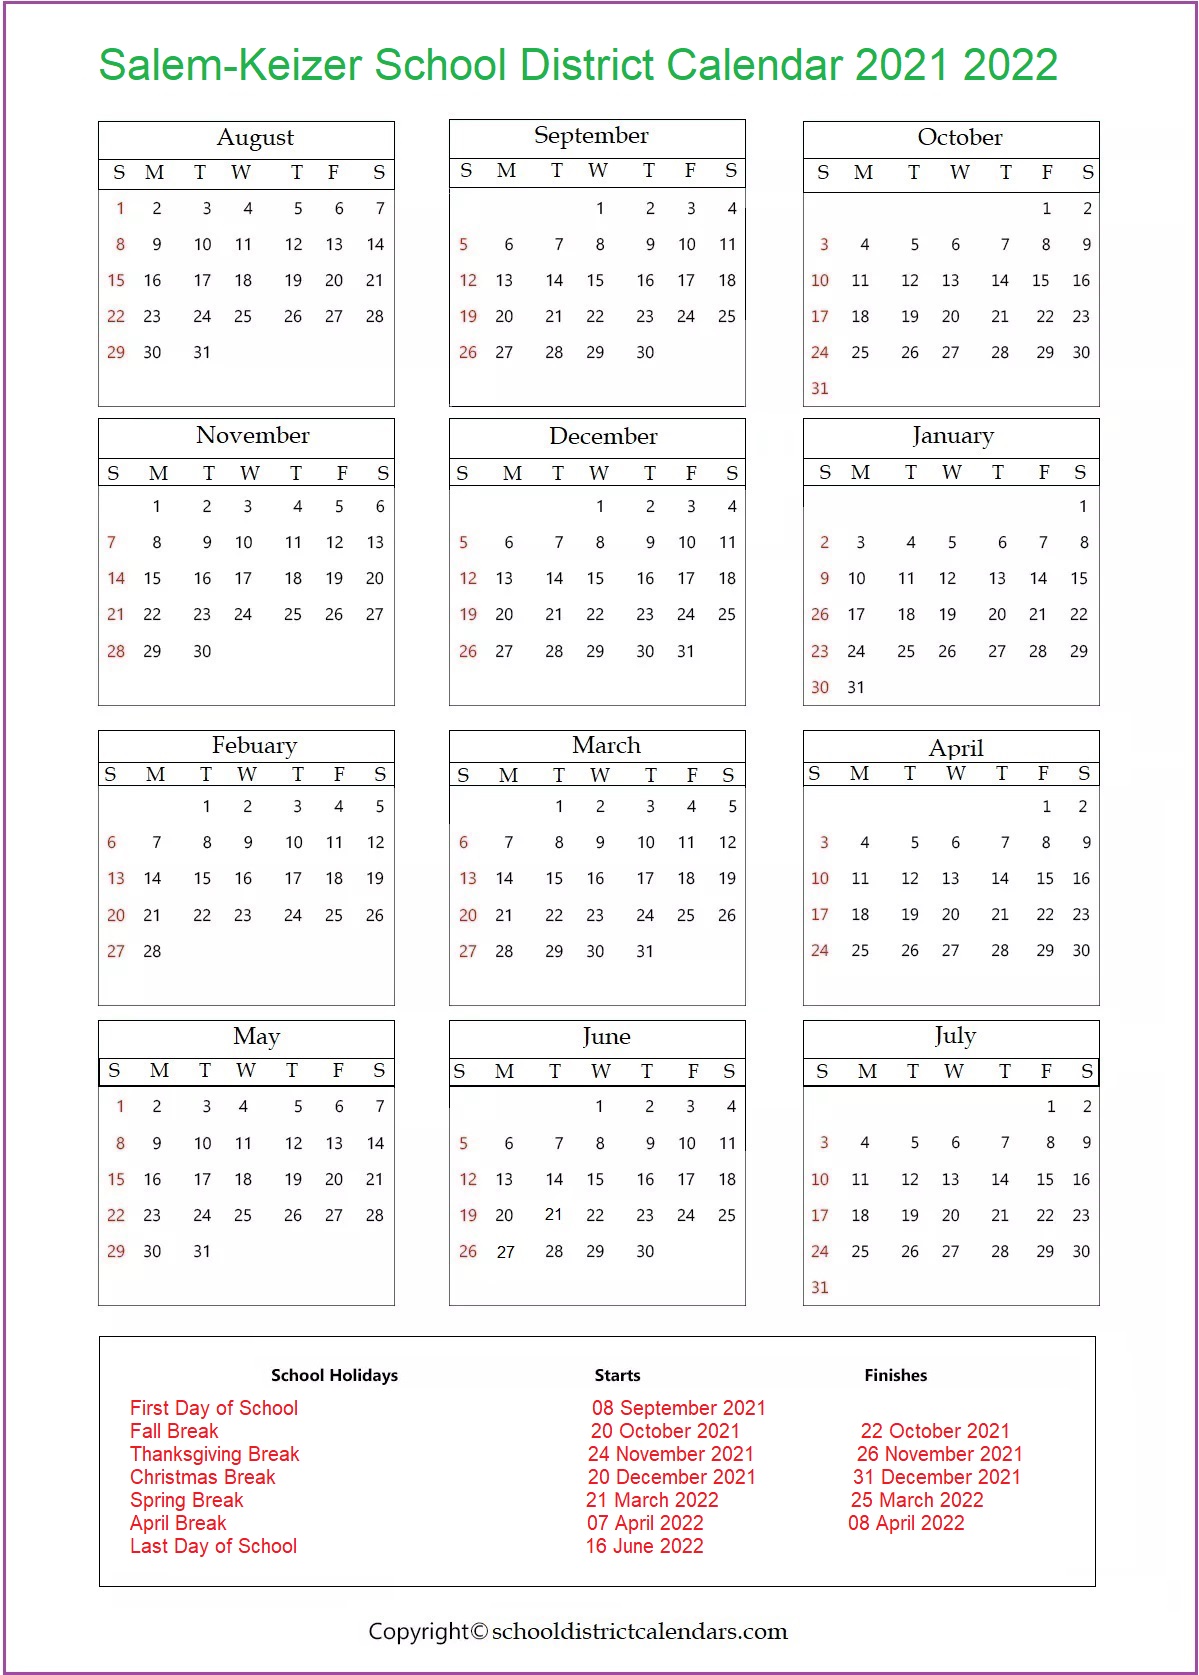 Salem-Keizer School District, Oregon Calendar Holidays 2021-2022